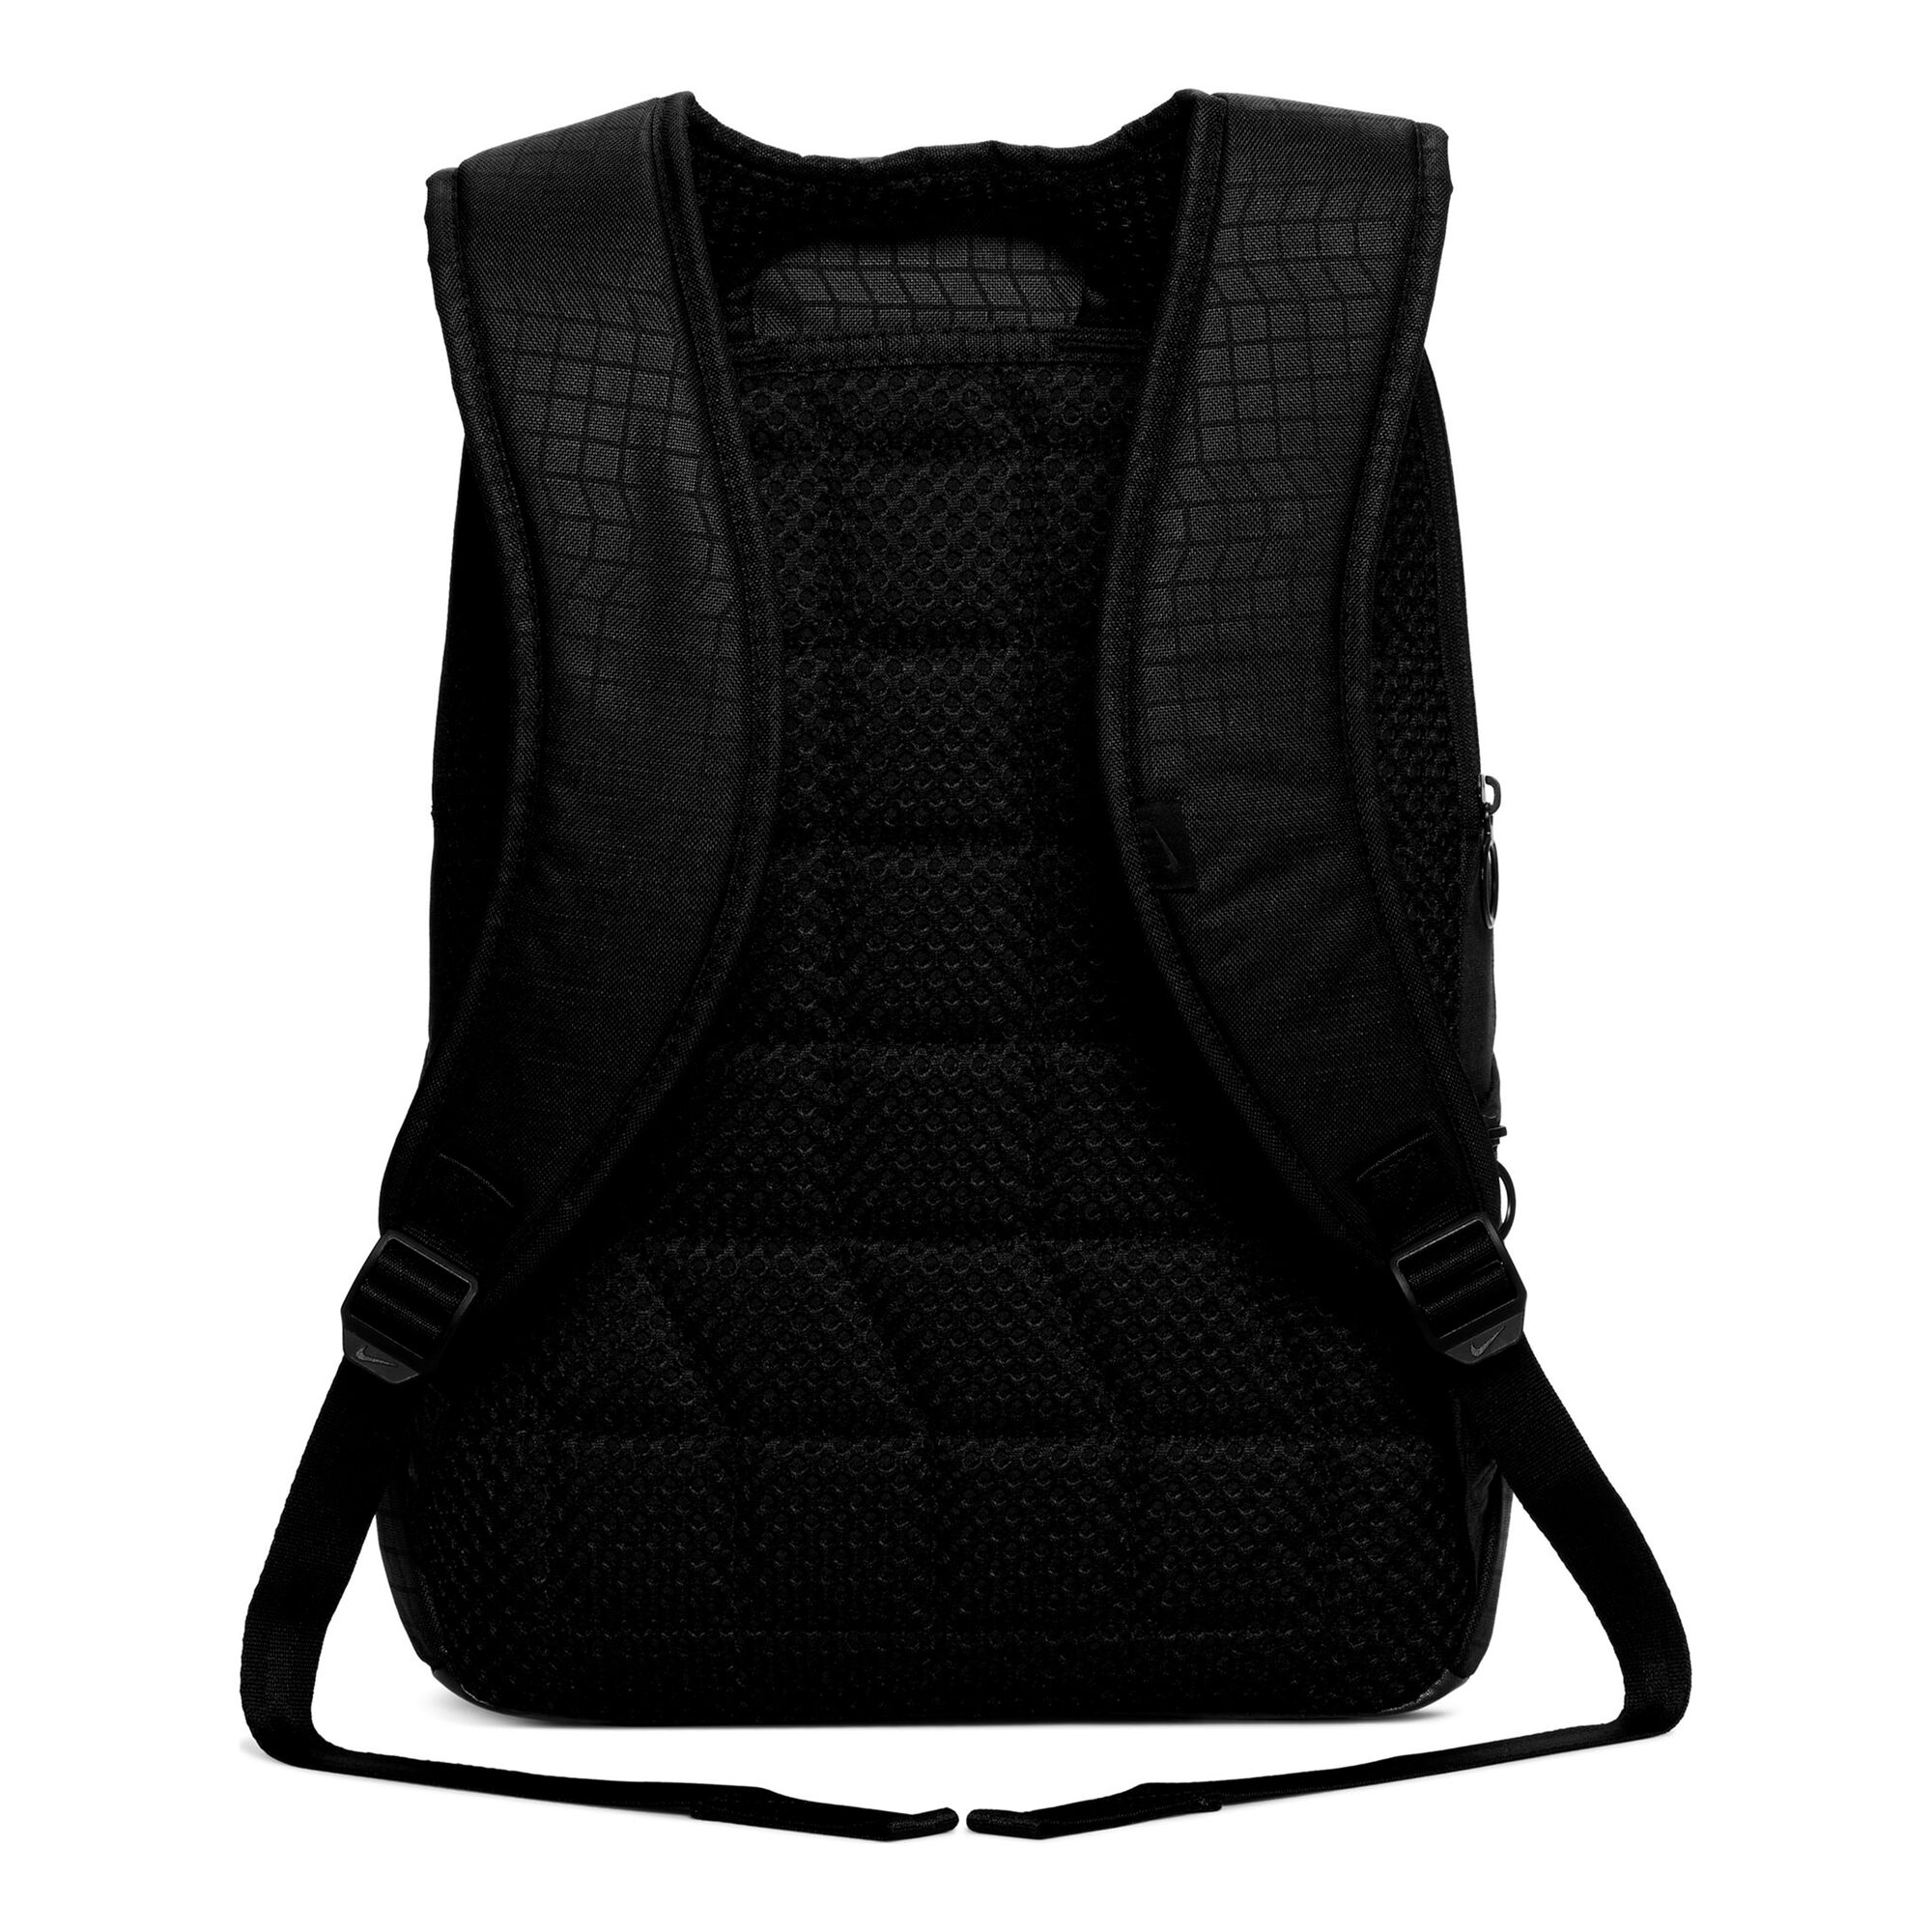 Buy Nike Brasilia Winterized Backpack Black, Schwarz Glänzend